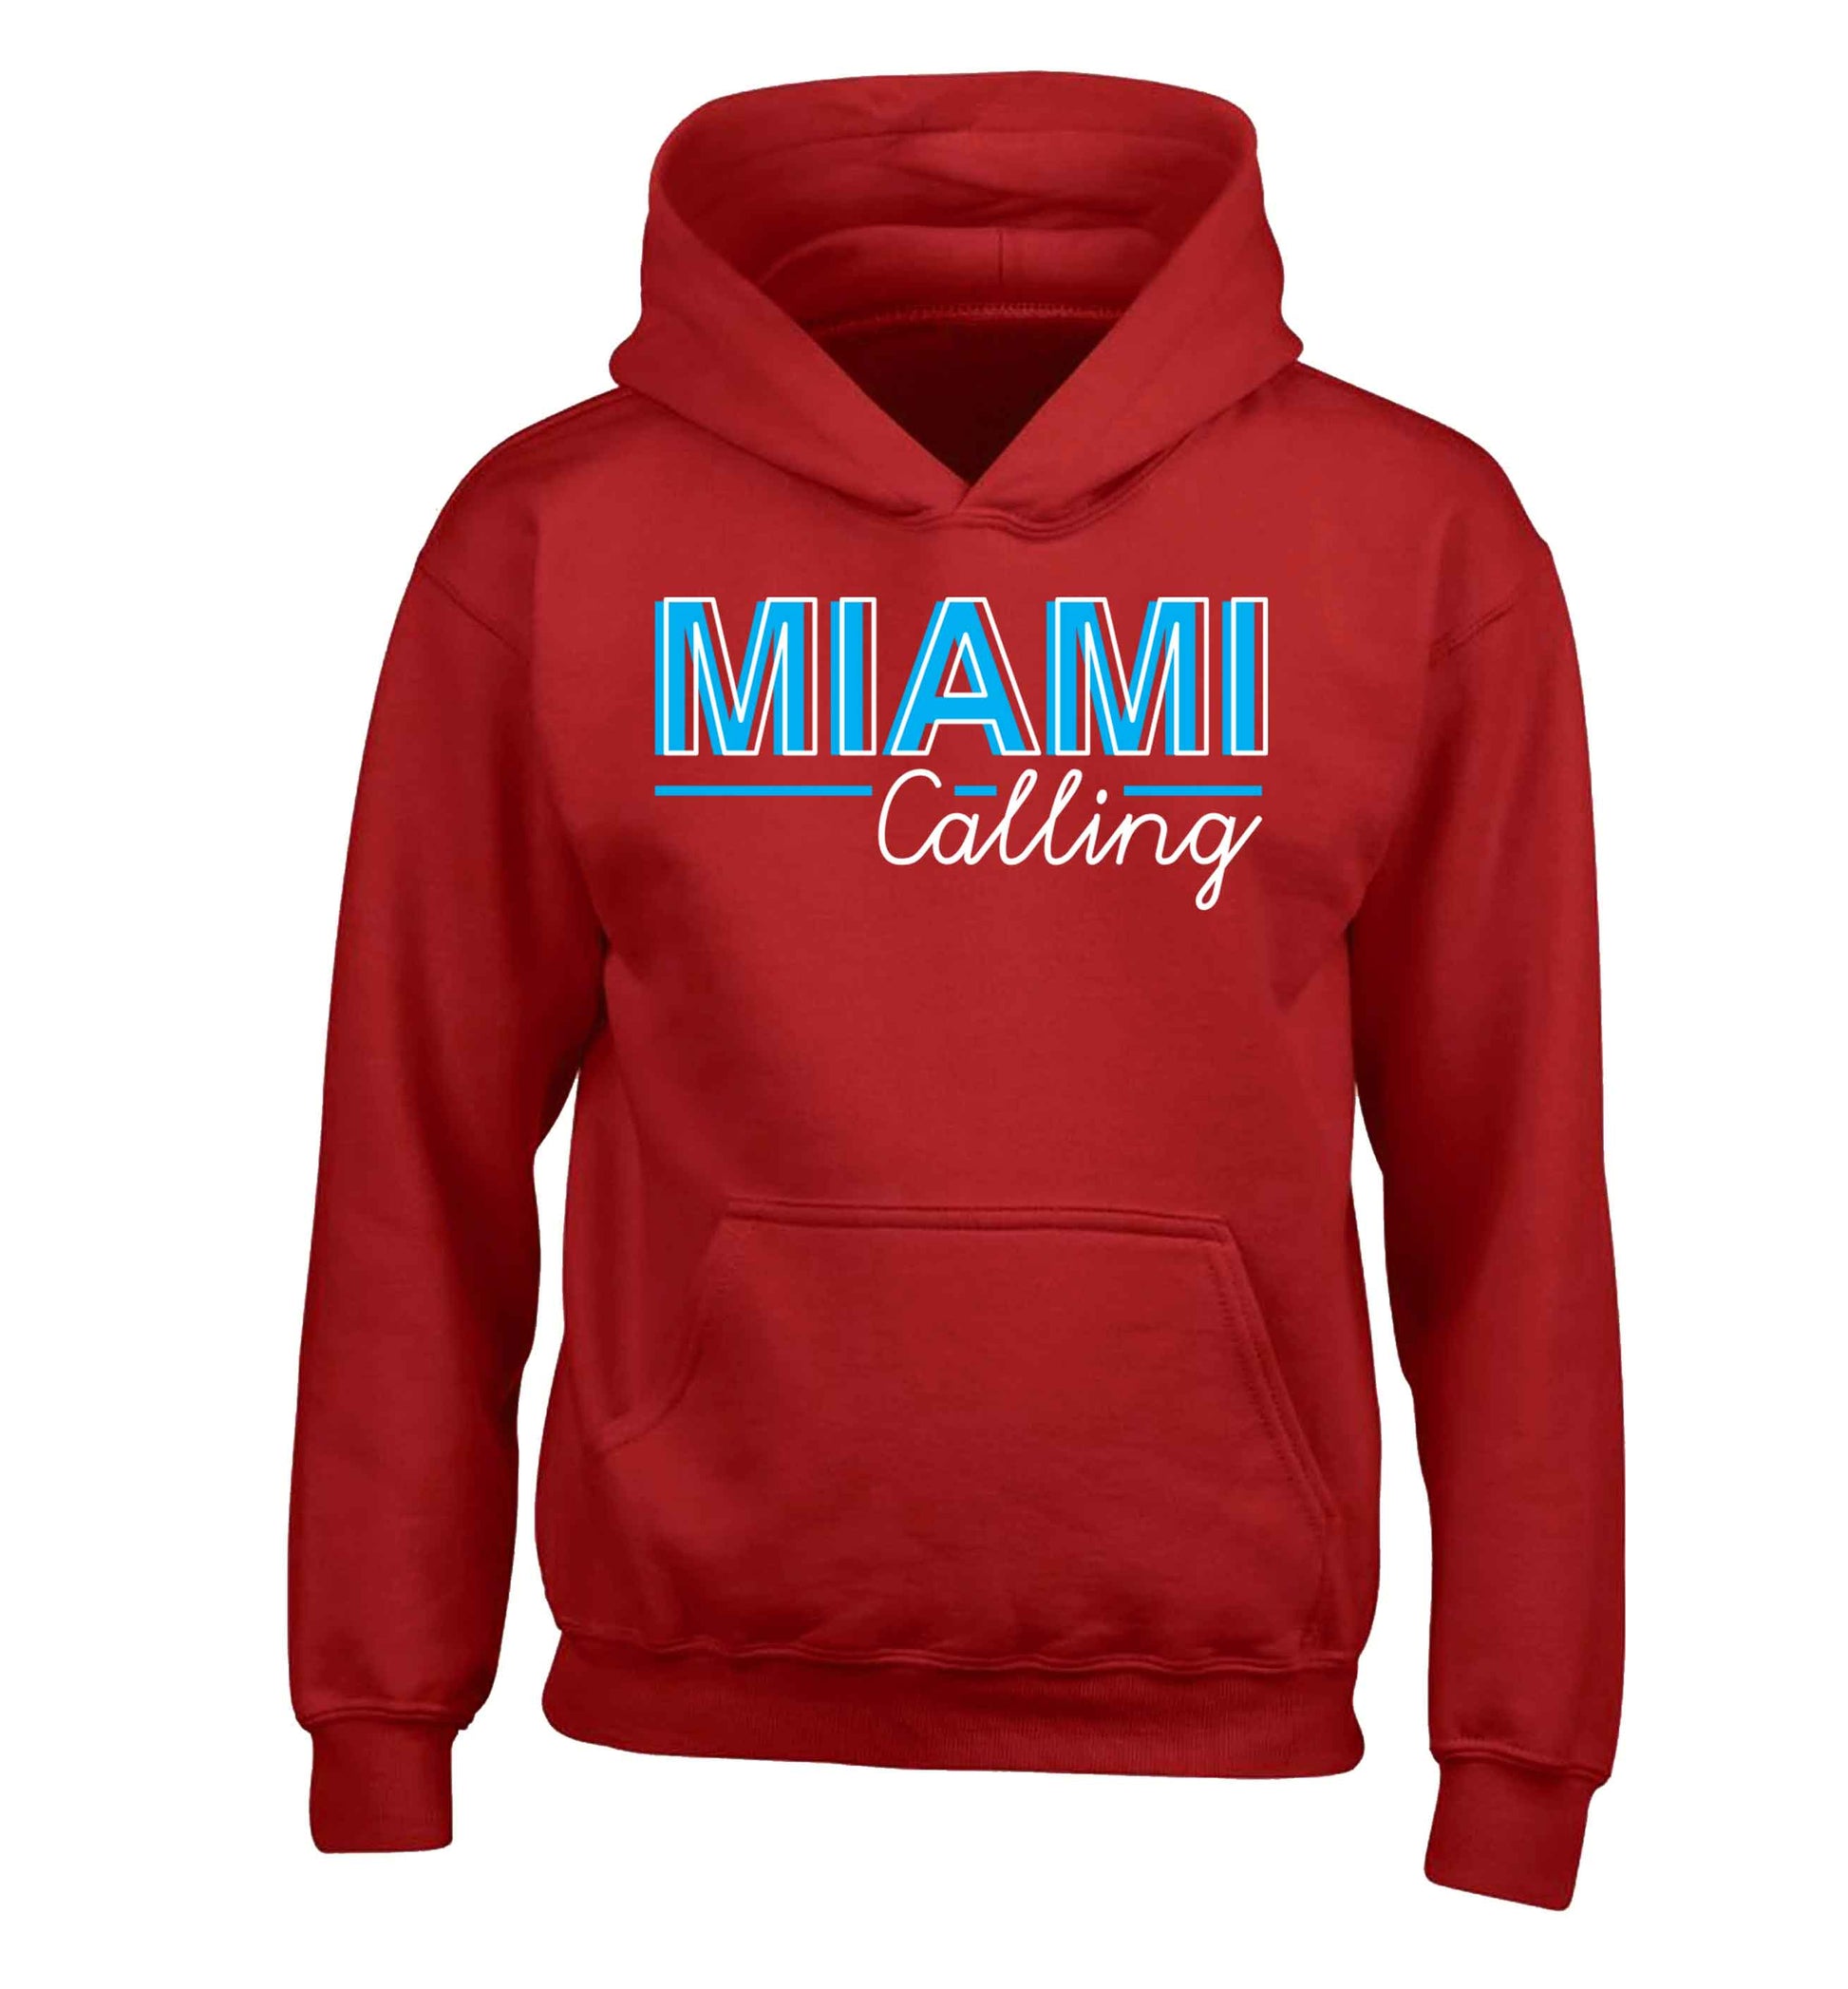 Miami calling children's red hoodie 12-13 Years